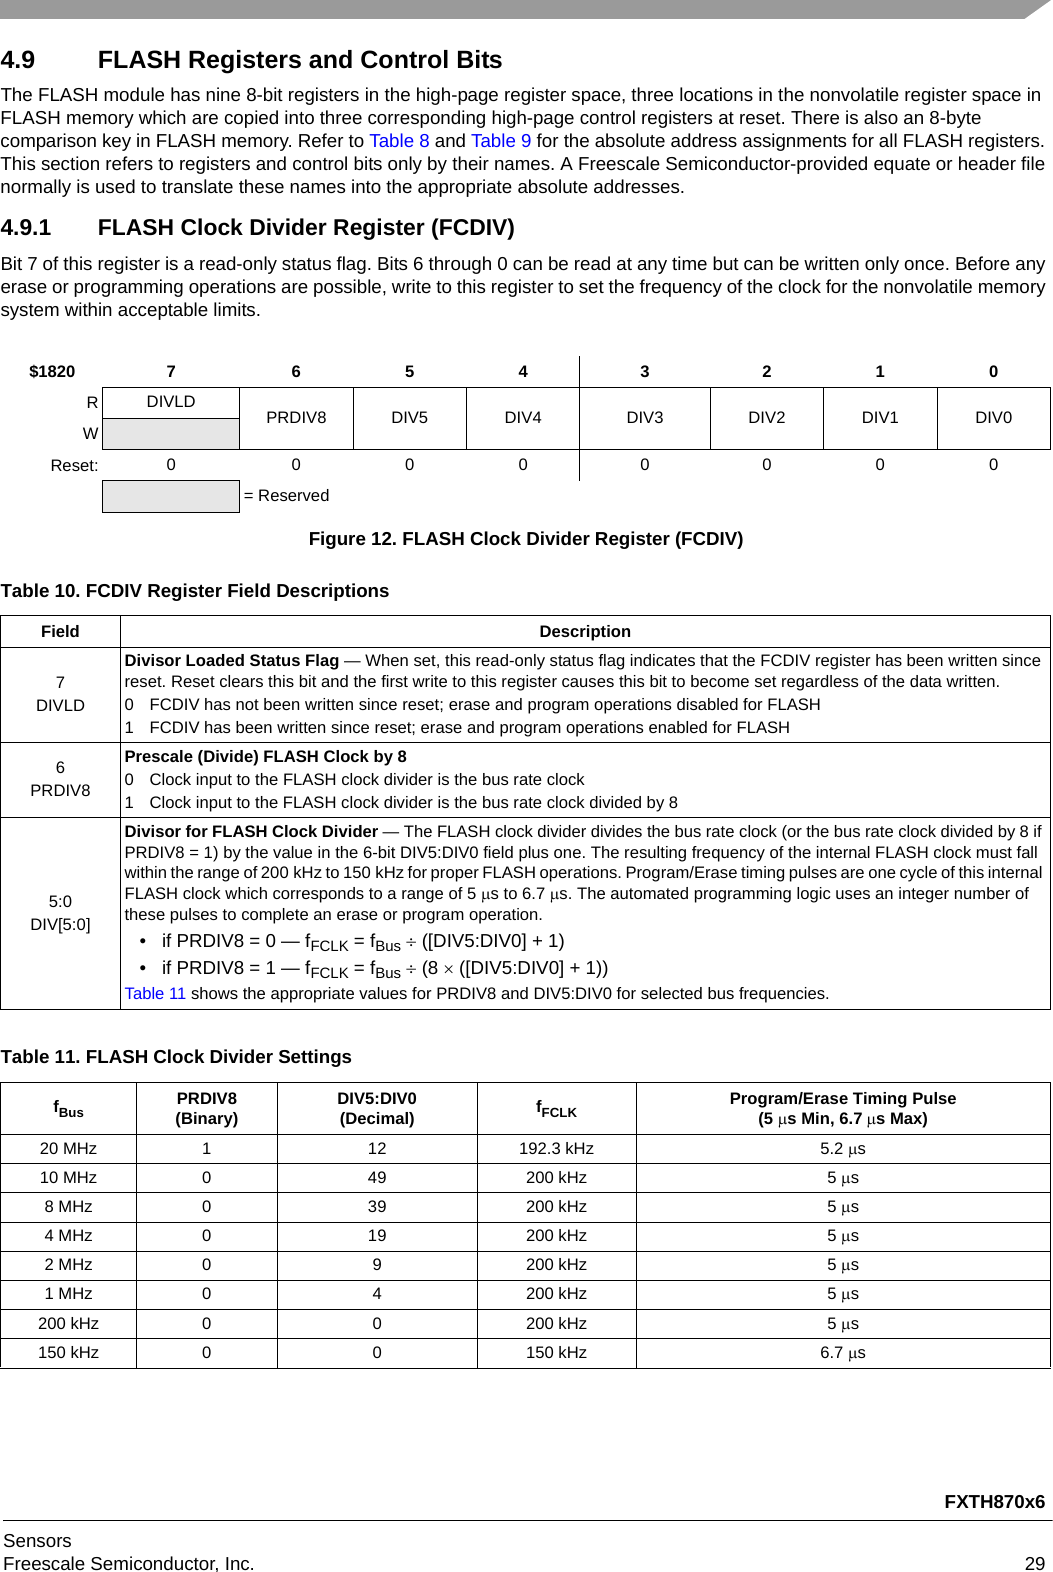 Continental Automotive Tis 03 Tire Pressure Monitoring System User Manual Tg1d Chrysler Functional Description V4